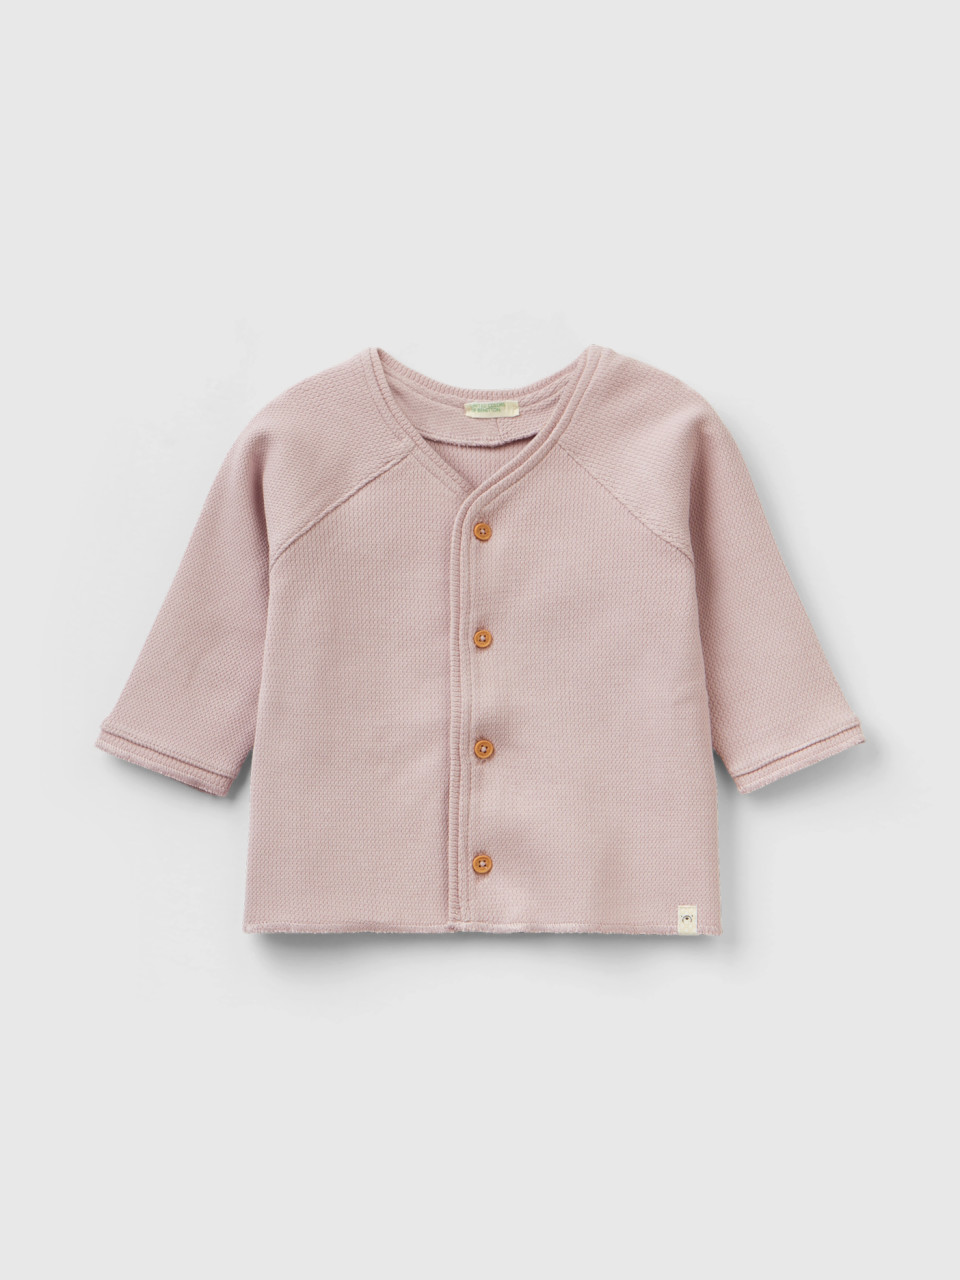 Benetton, Sweatshirt With Buttons, Pink, Kids